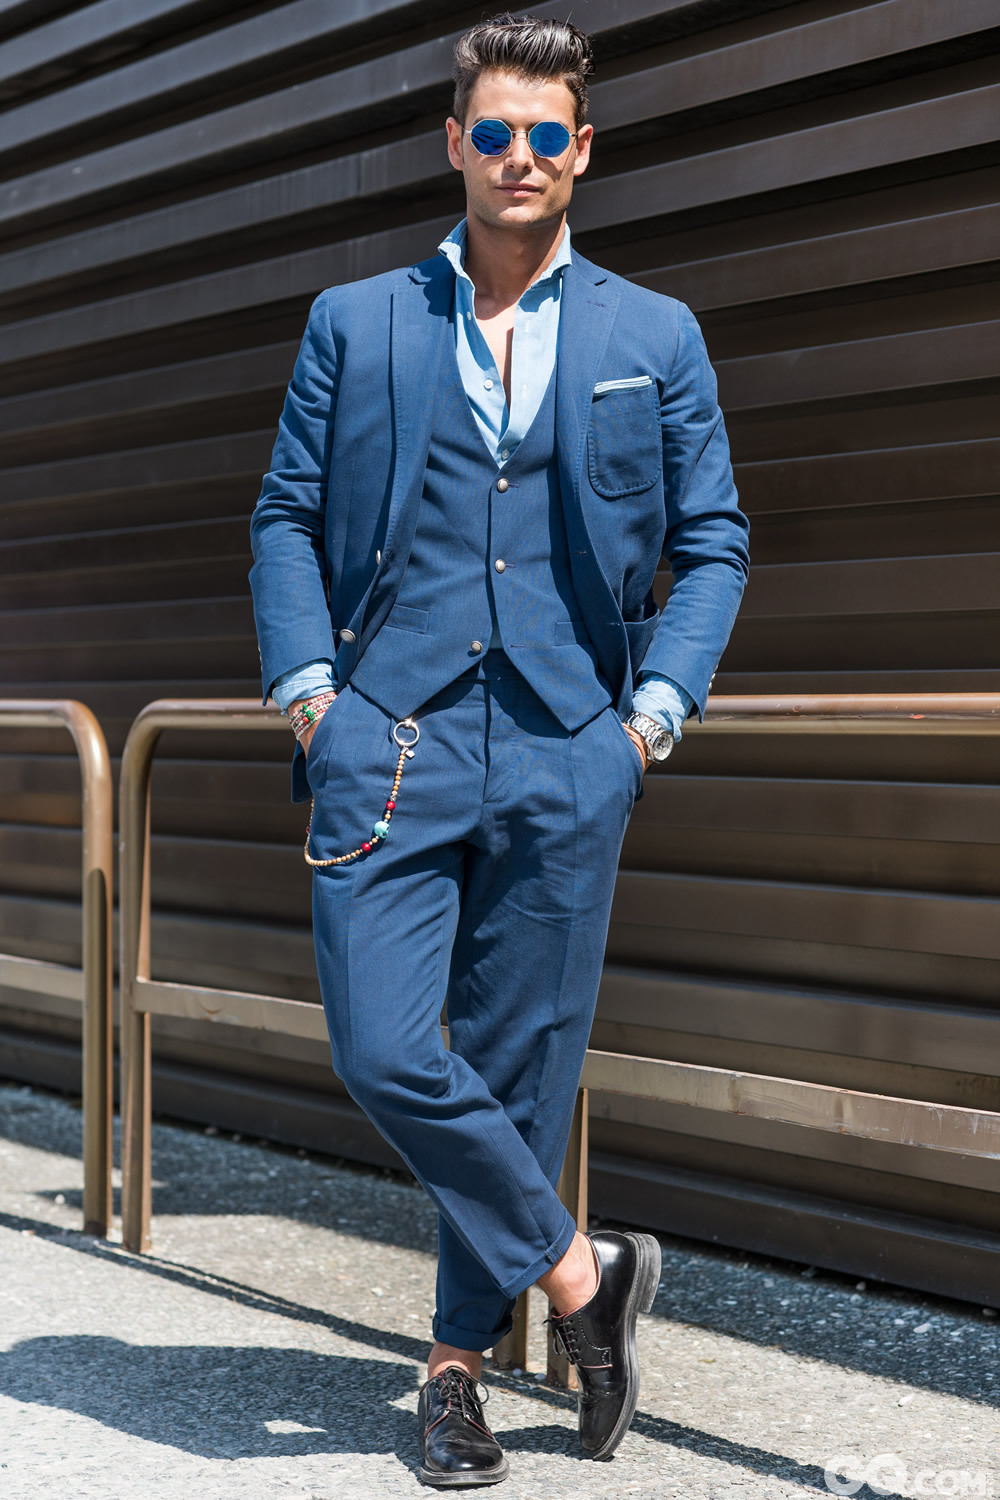 Frank
Sunglasses: Viver
Suit and shoes: made to mesure
Shirt: Suit Supply
Chain: Bespoke Moda

Inspiration: Denim and denim
（灵感就是满满的丹宁）